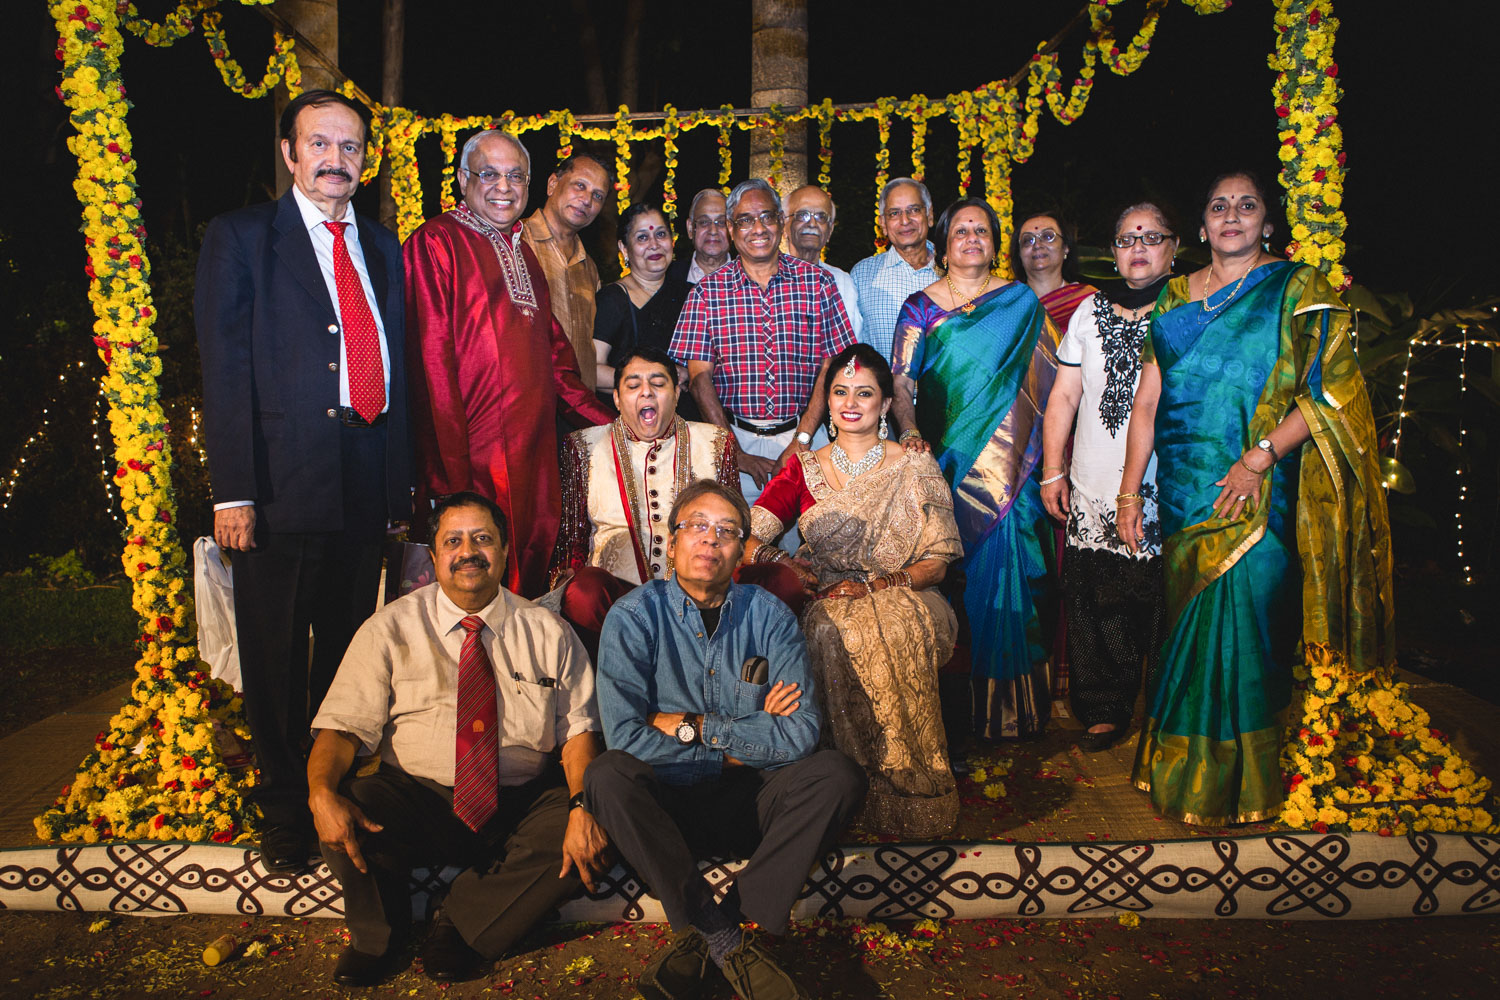 wedding reception at taj west end bangalore by dropdstudio weddings